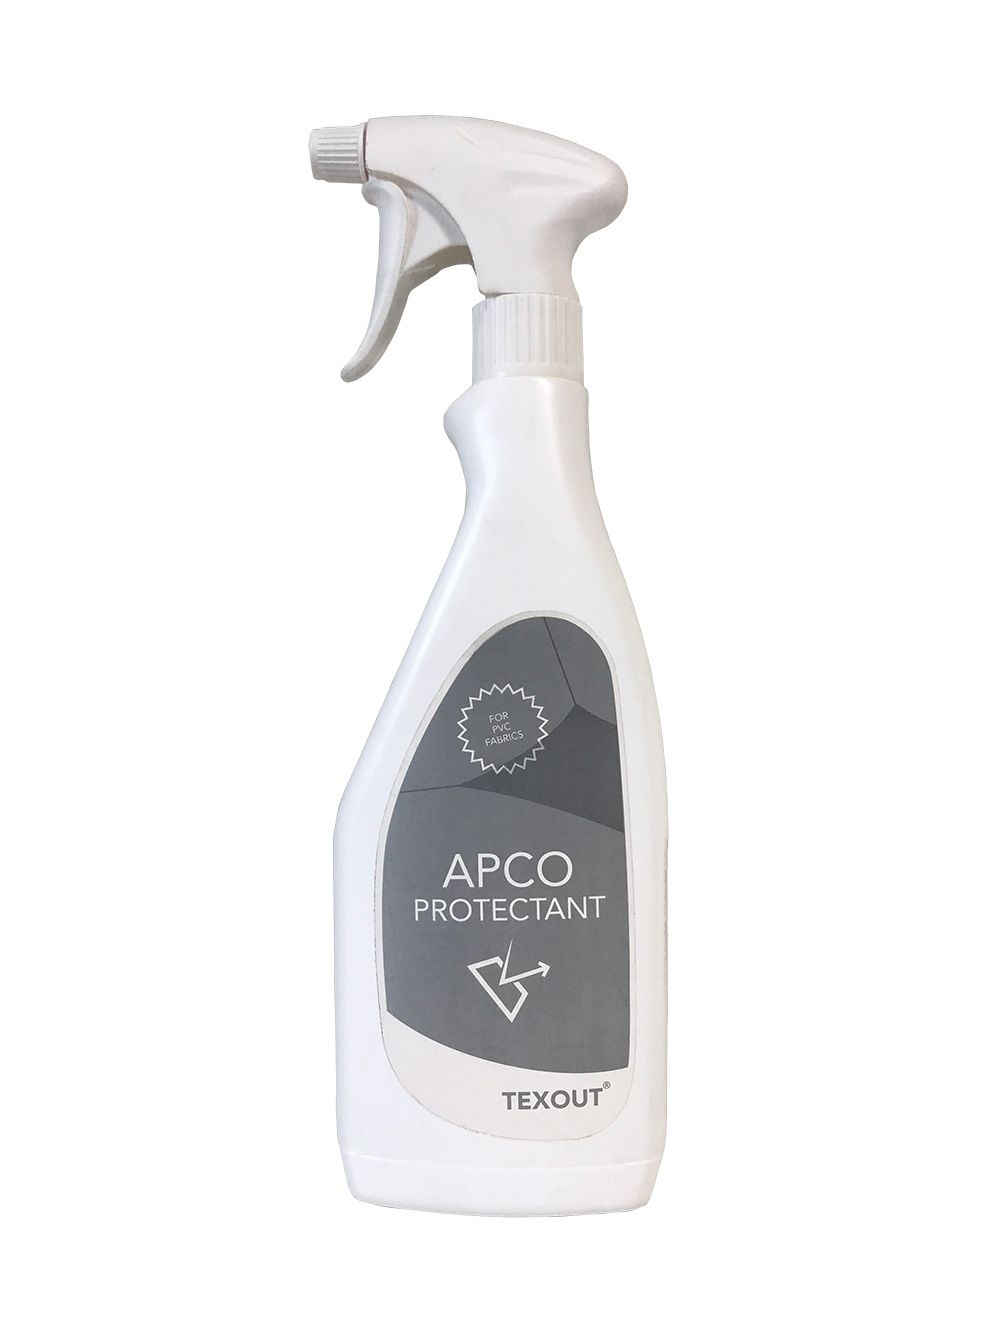 Apco Protectant Cleaner für PVC / LKW Planen